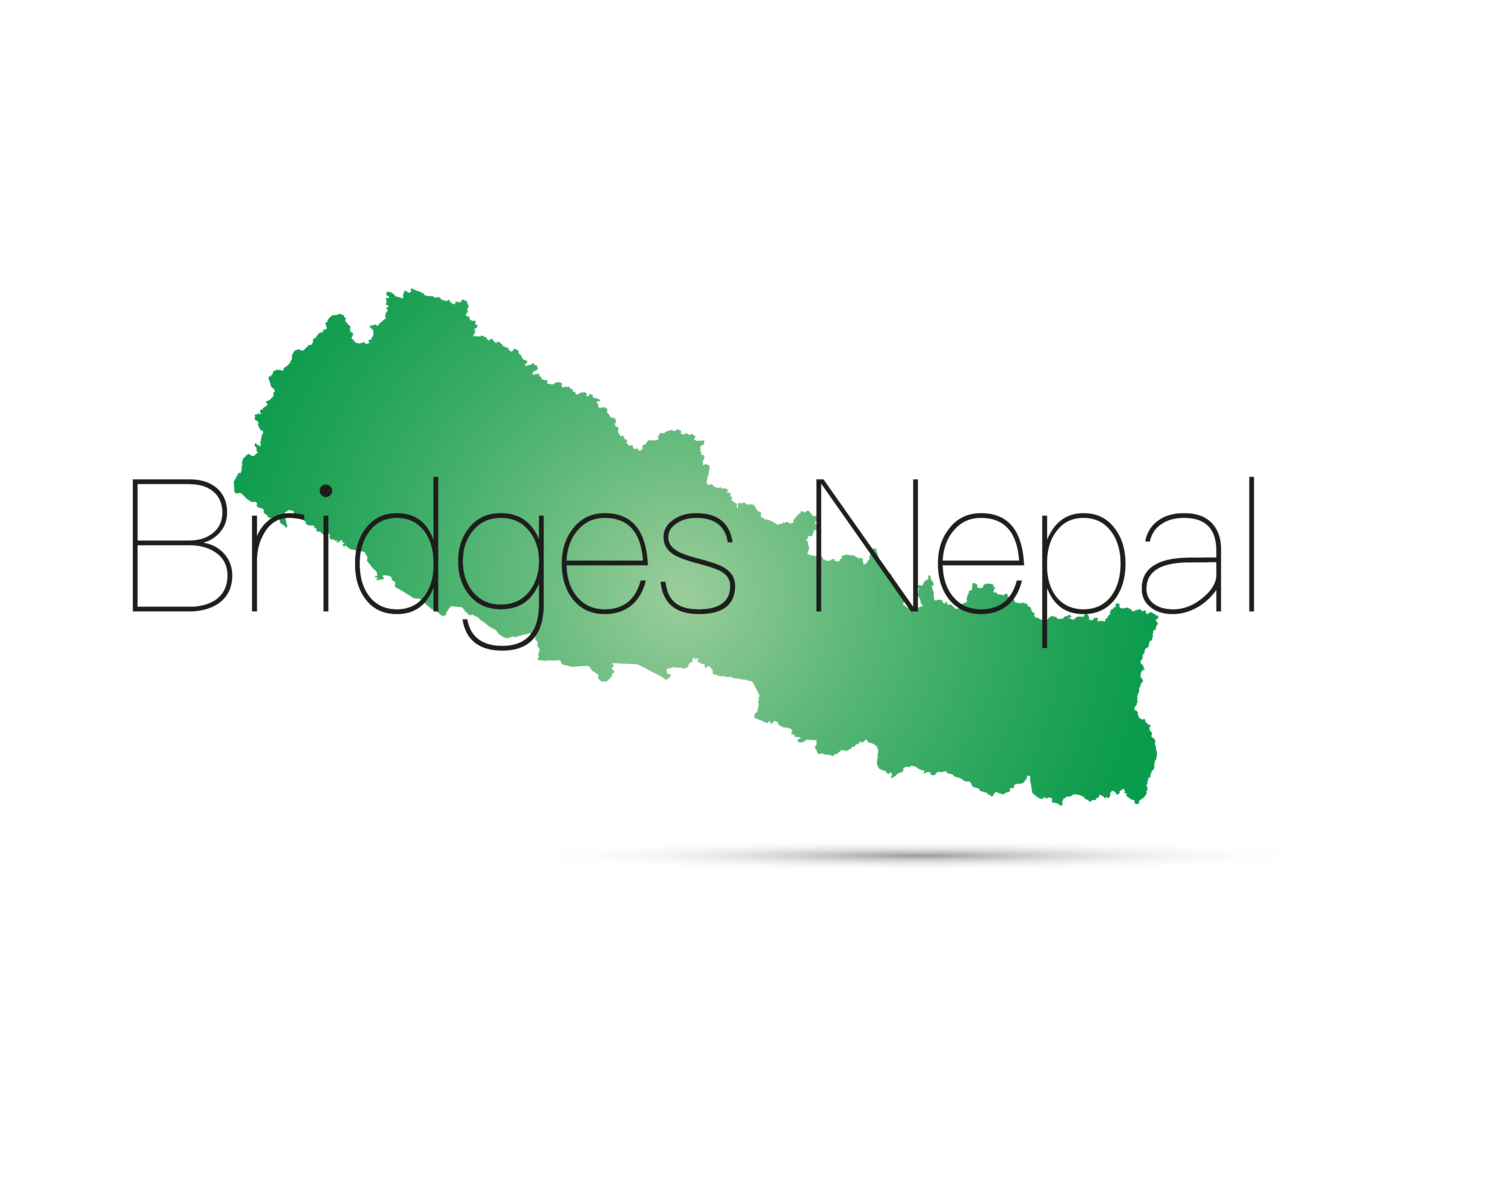 Bridges Nepal